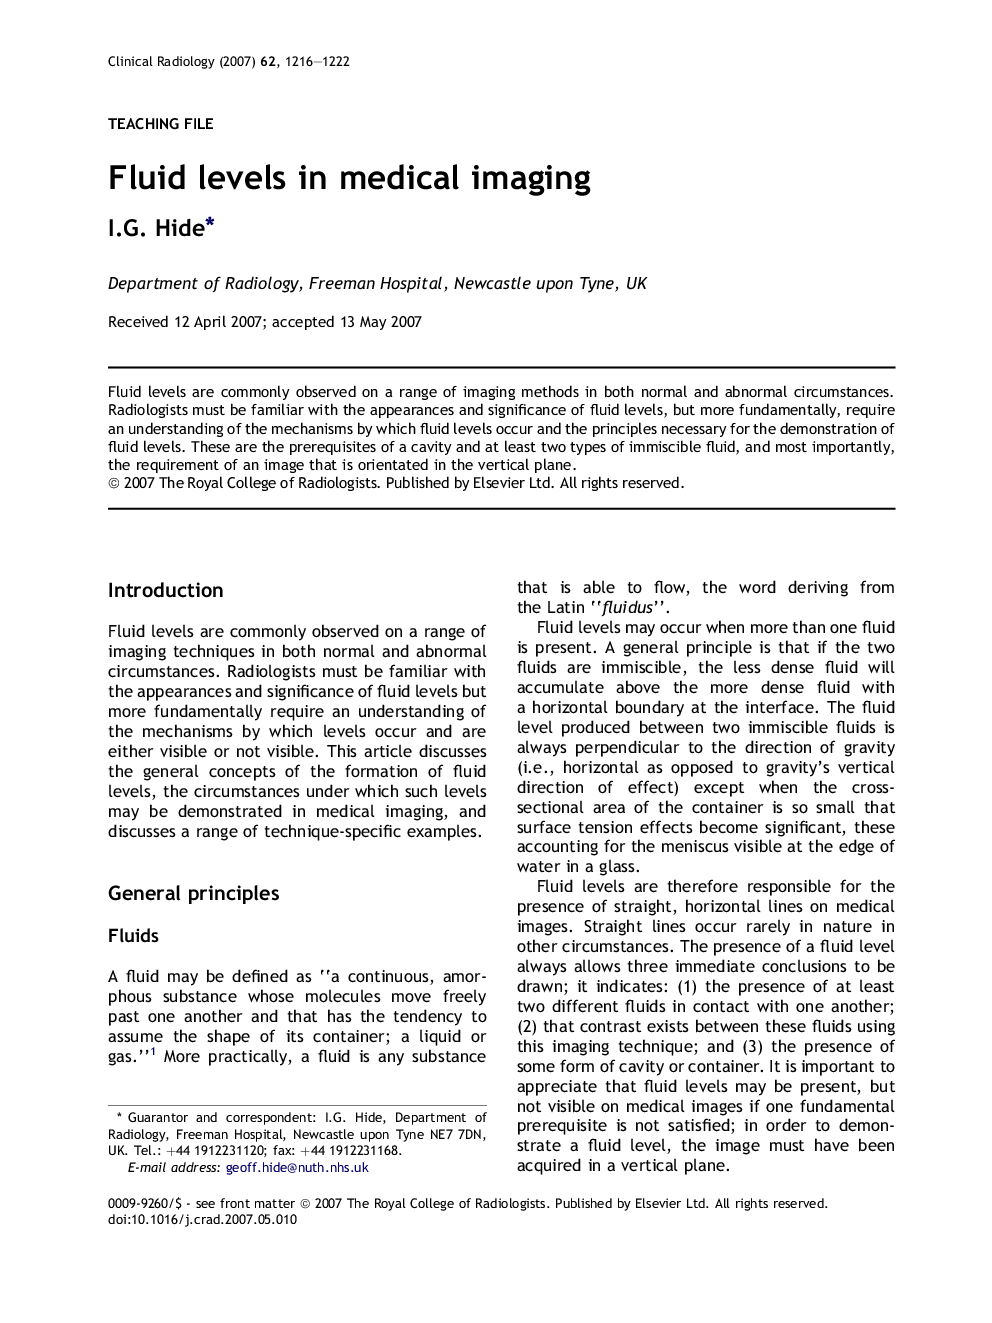 Fluid levels in medical imaging